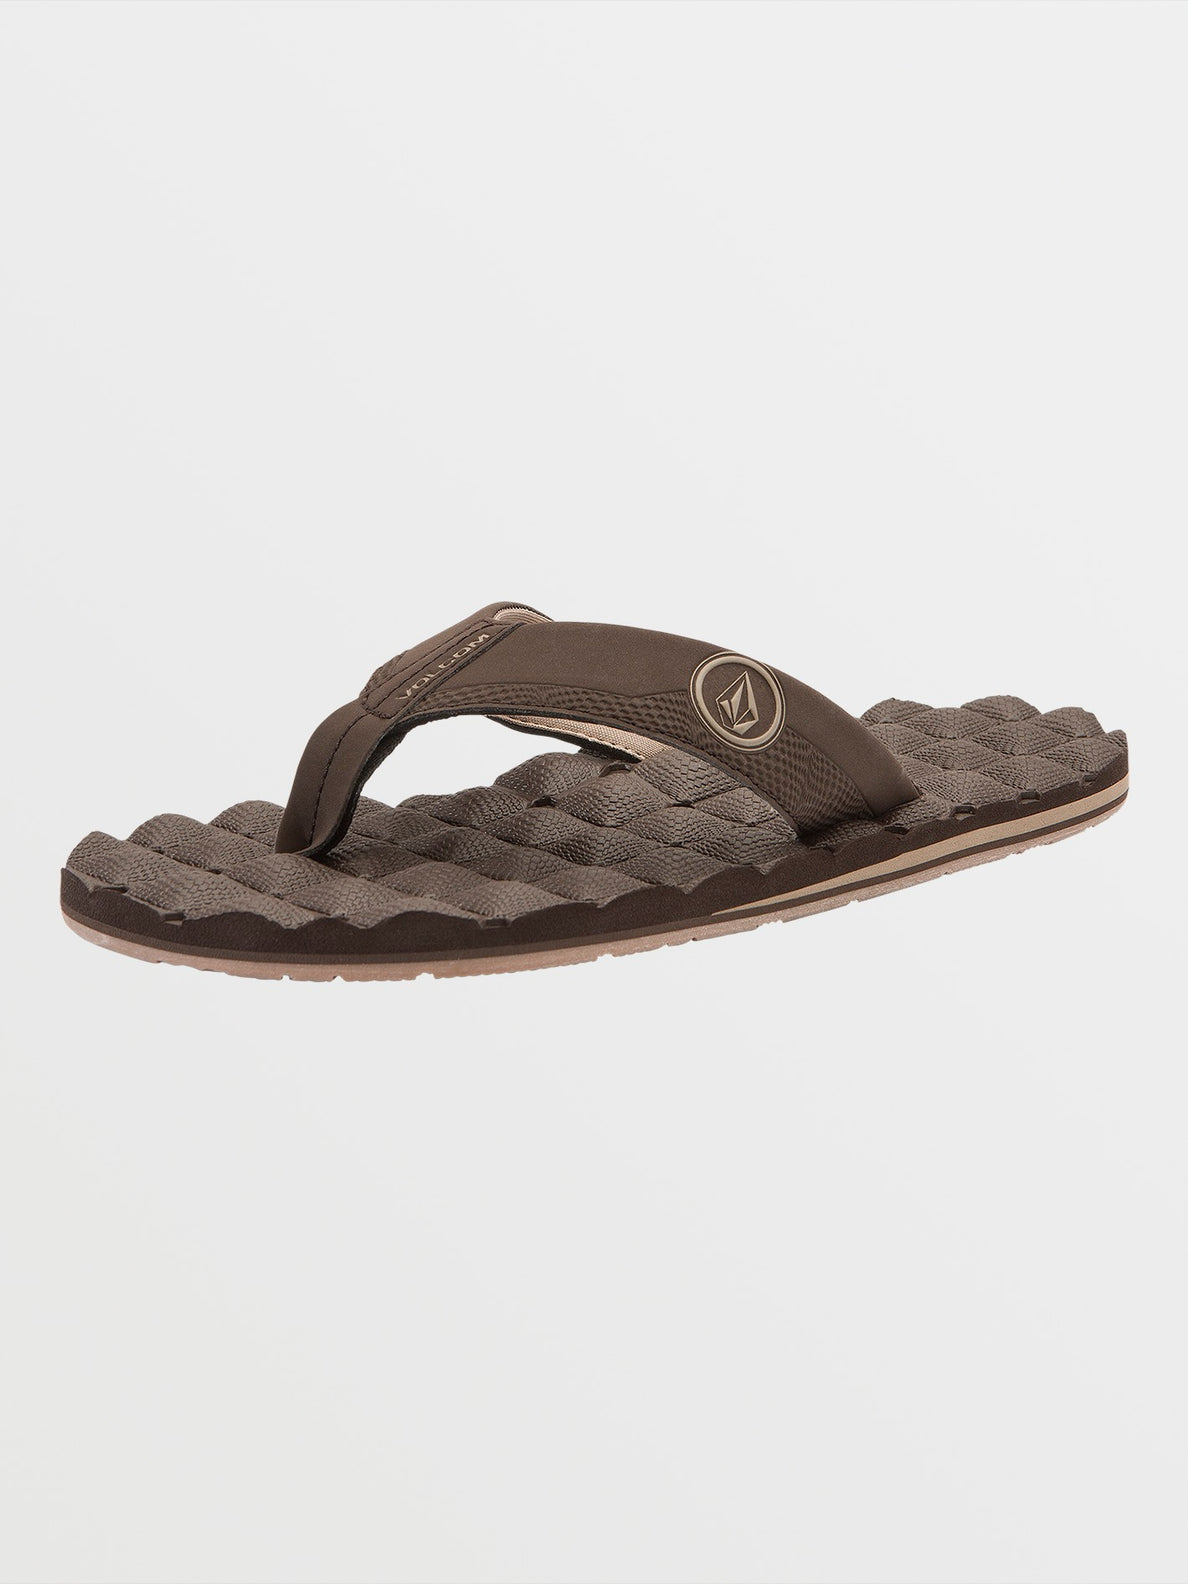 Recliner Sandals - Brown